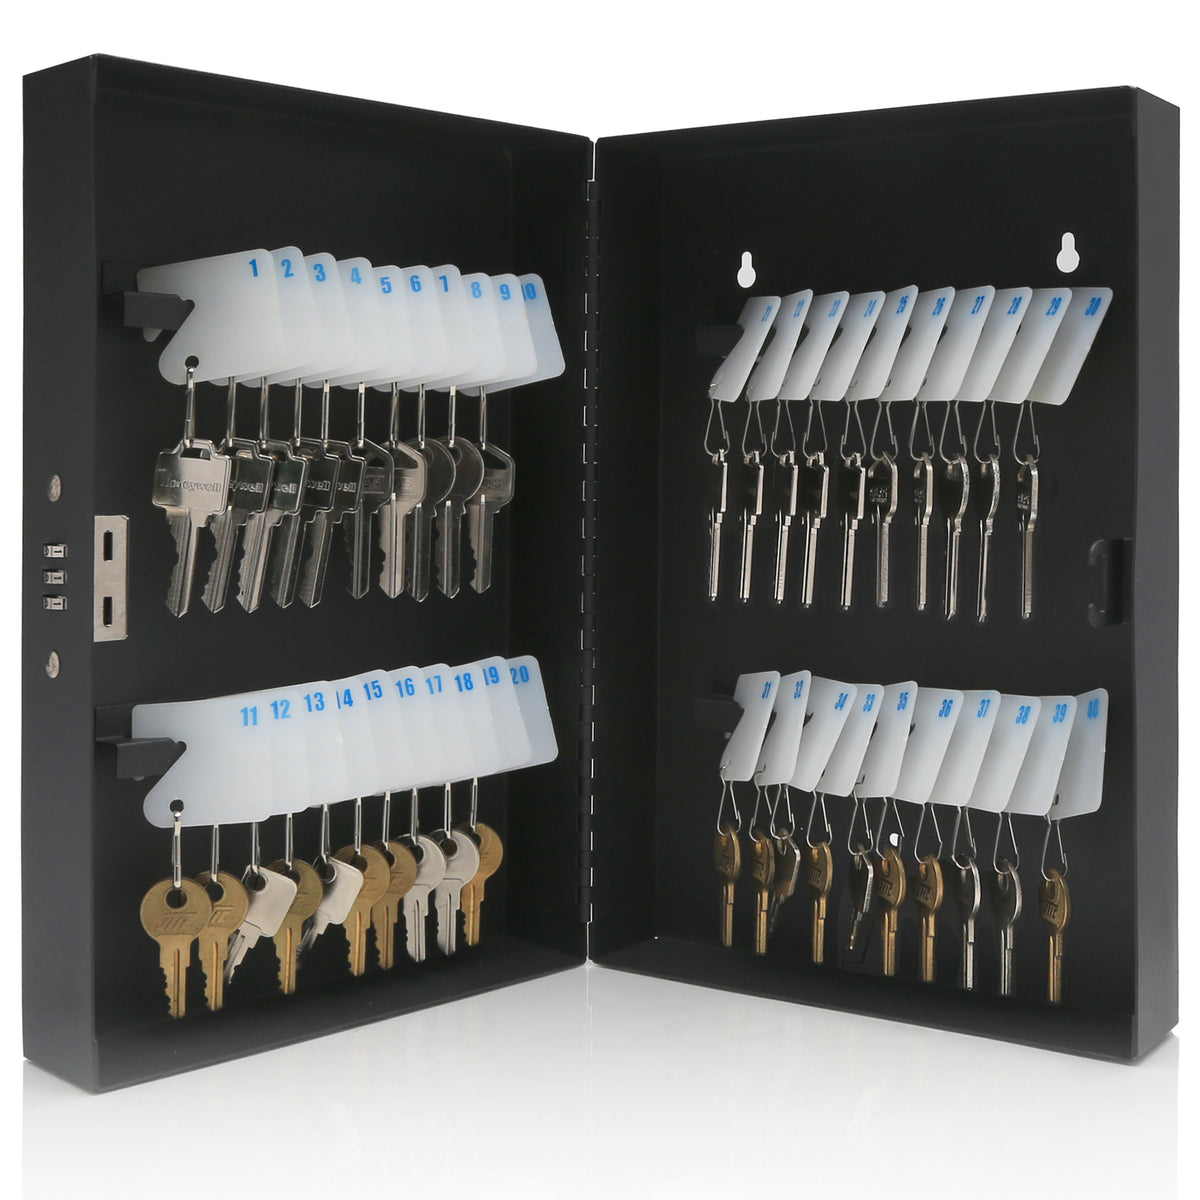 Honeywell 6107 40-Key Cabinet with Key Lock Open 2